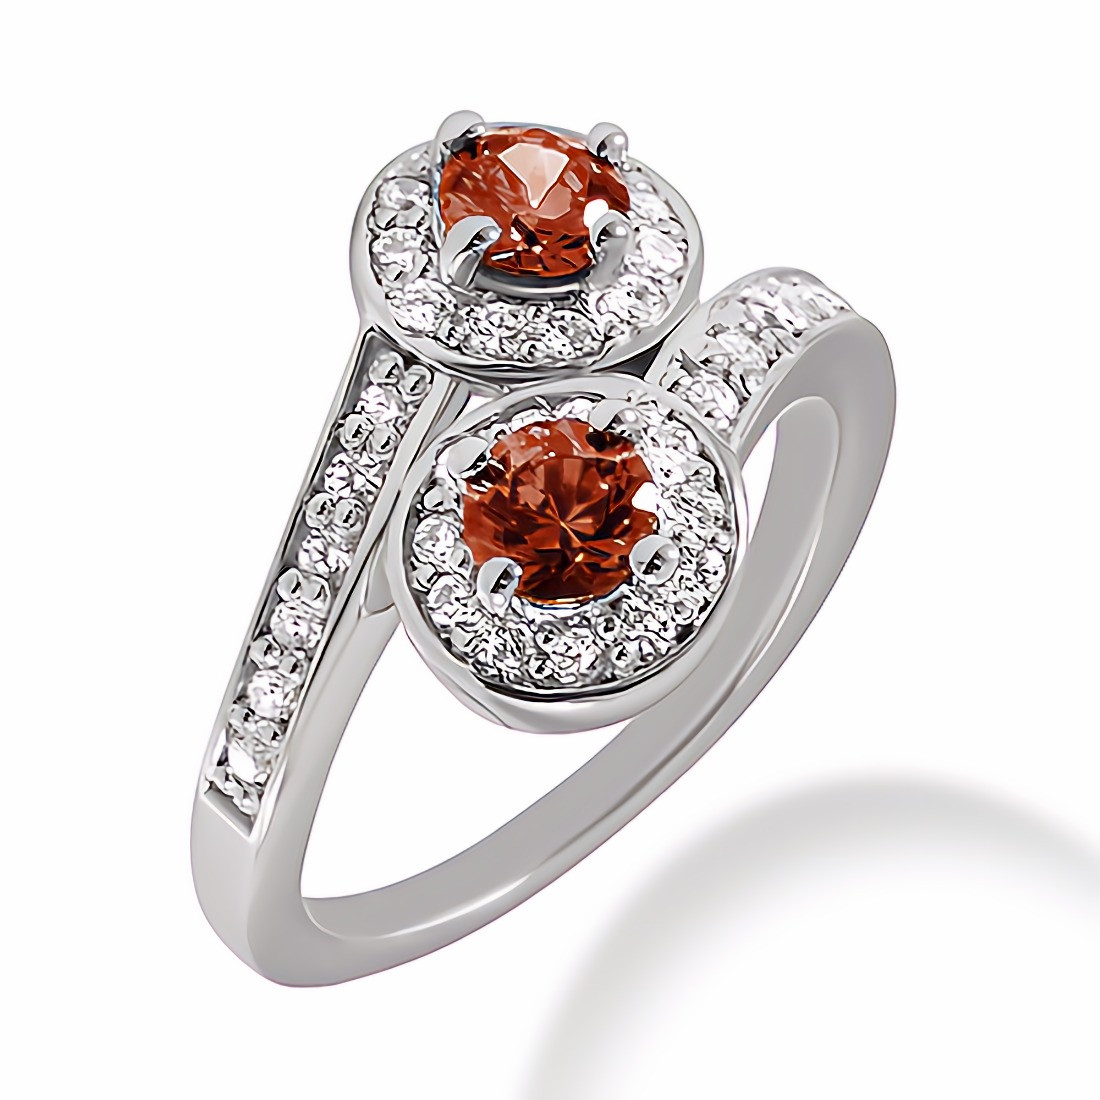 Unique Red Diamond Cocktail Ring